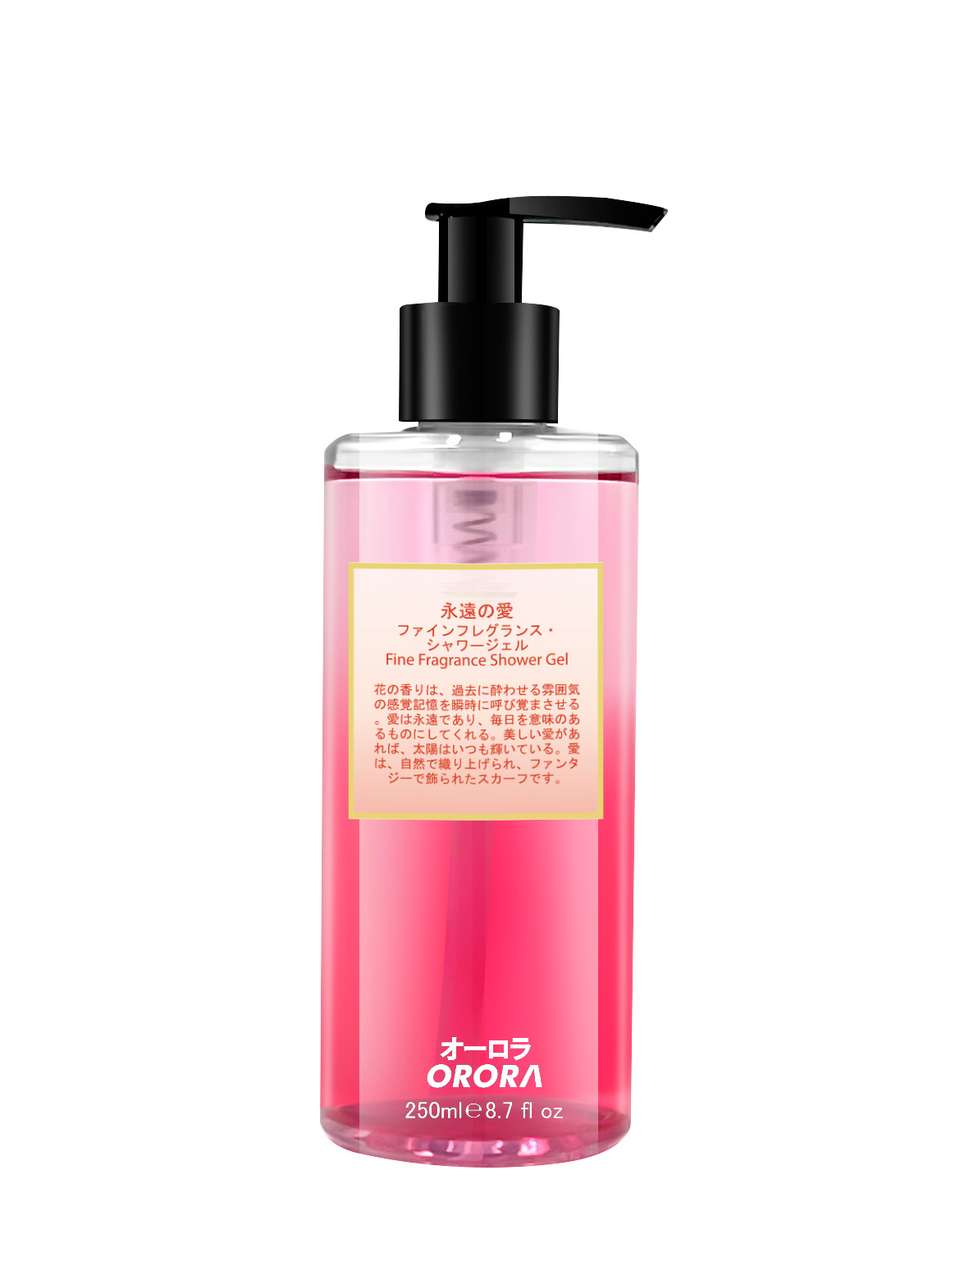 Japan Orora Forever Love  - Fine Fragrance Shower Gel 250ml image